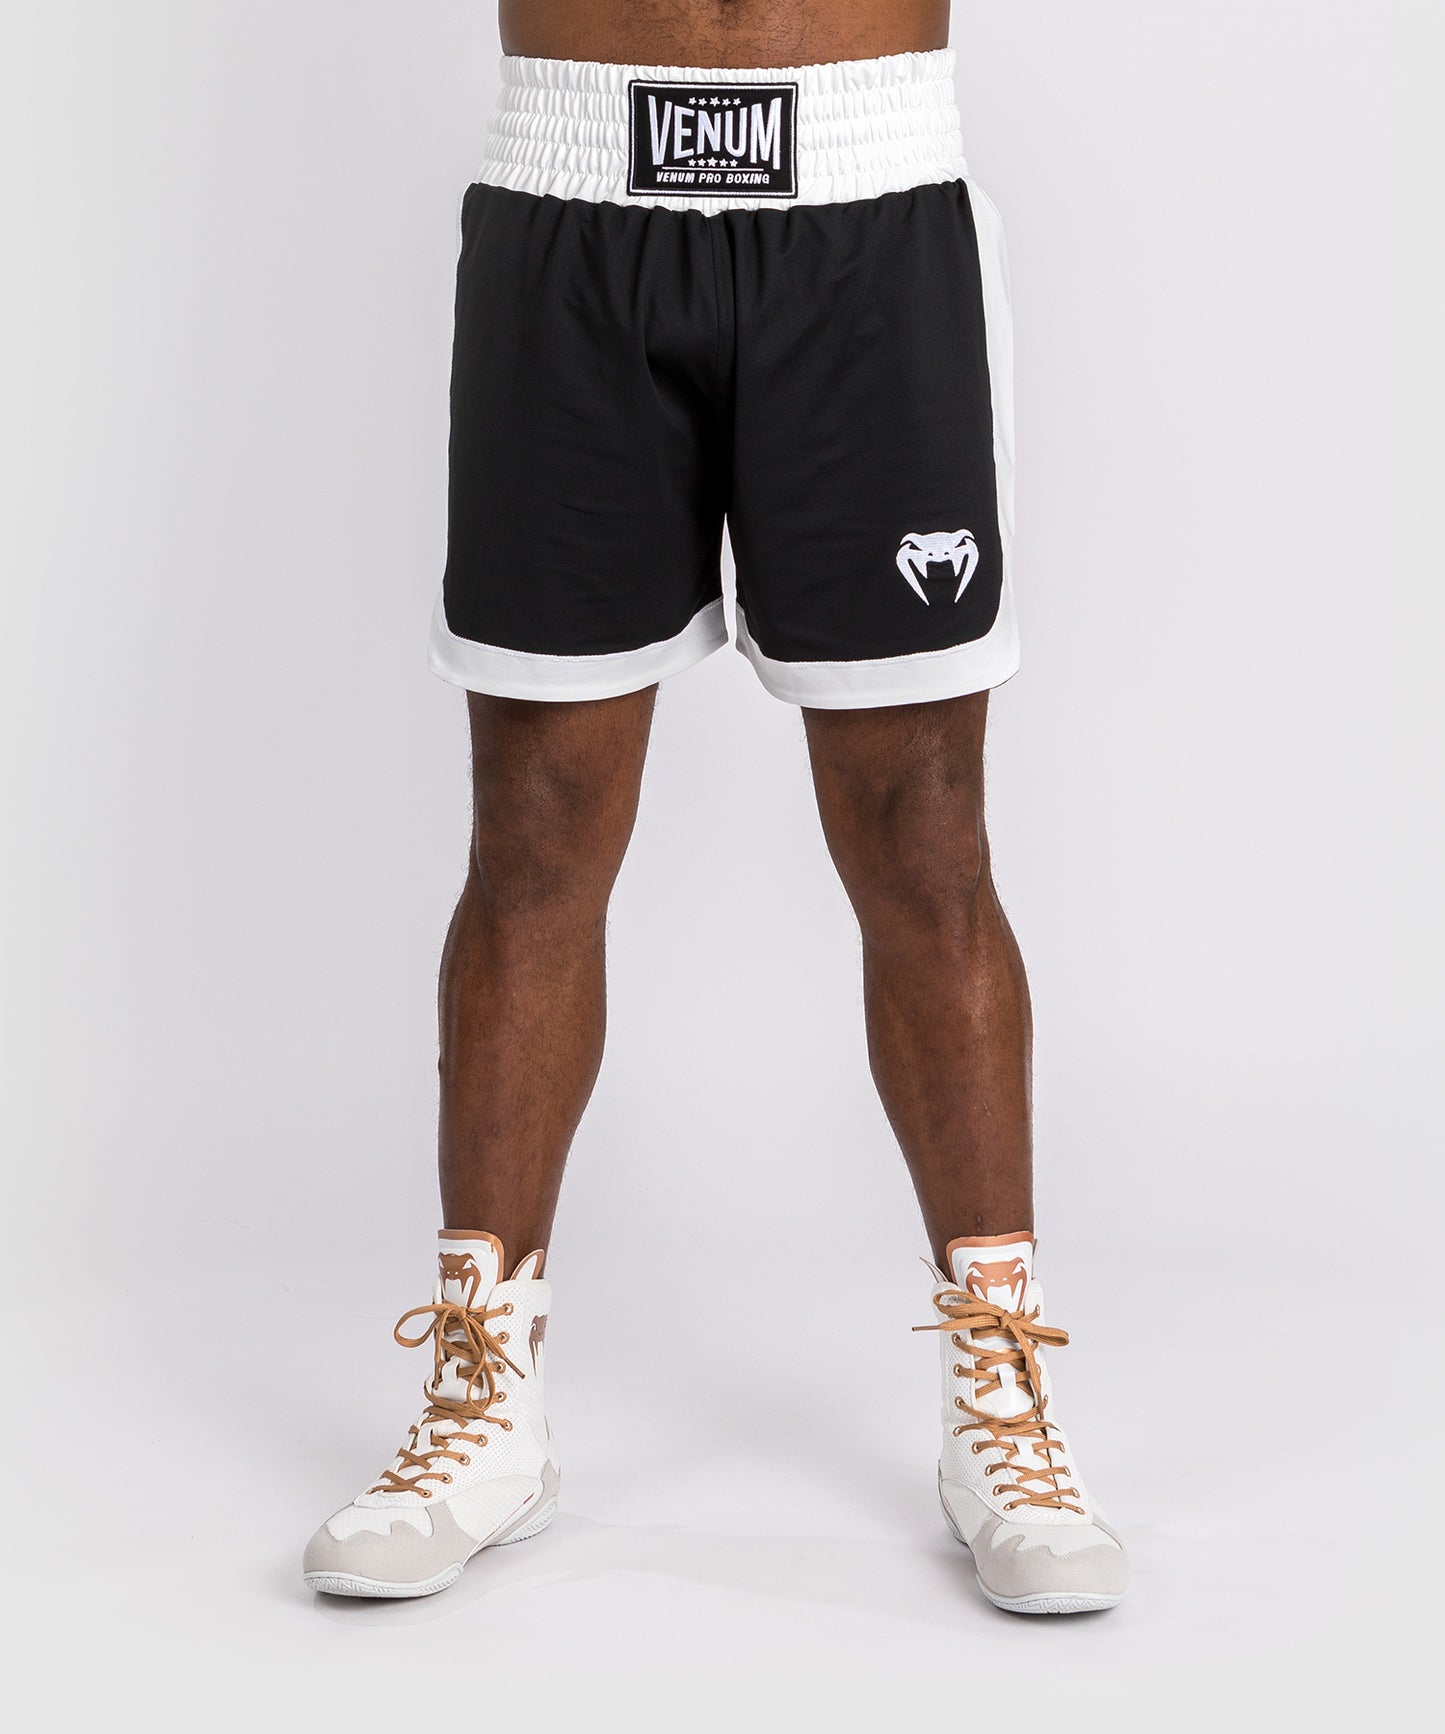 Venum Classic Boxing Shorts - Negro/Blanco